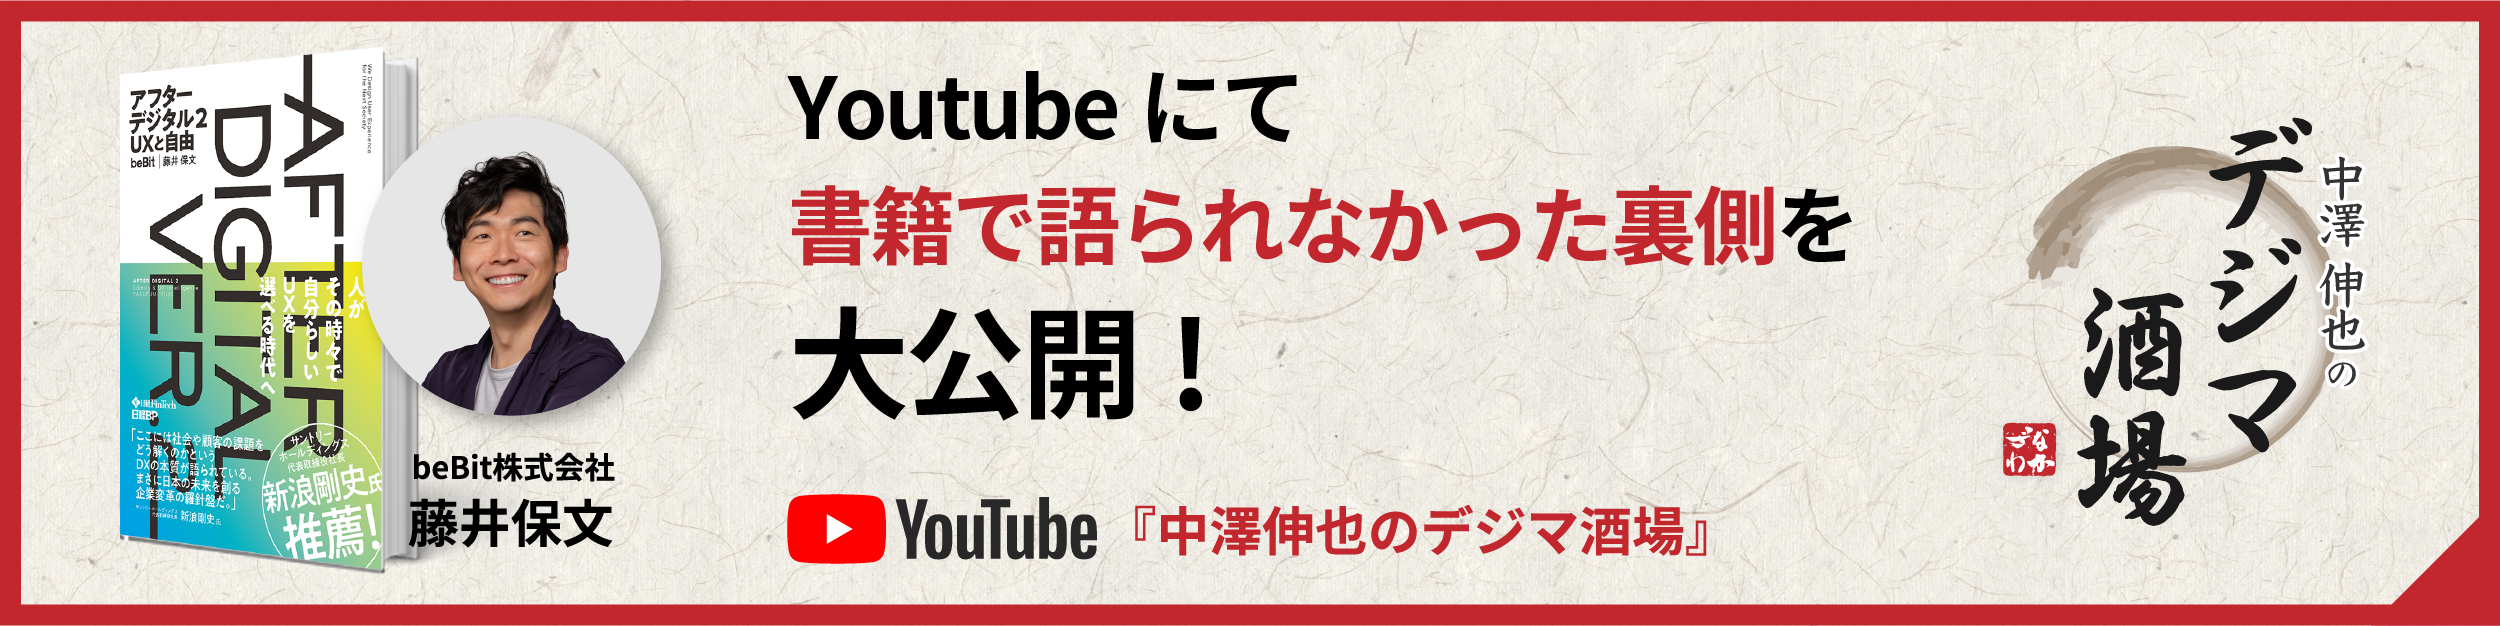 Fujiisan_youtube_popup_PC